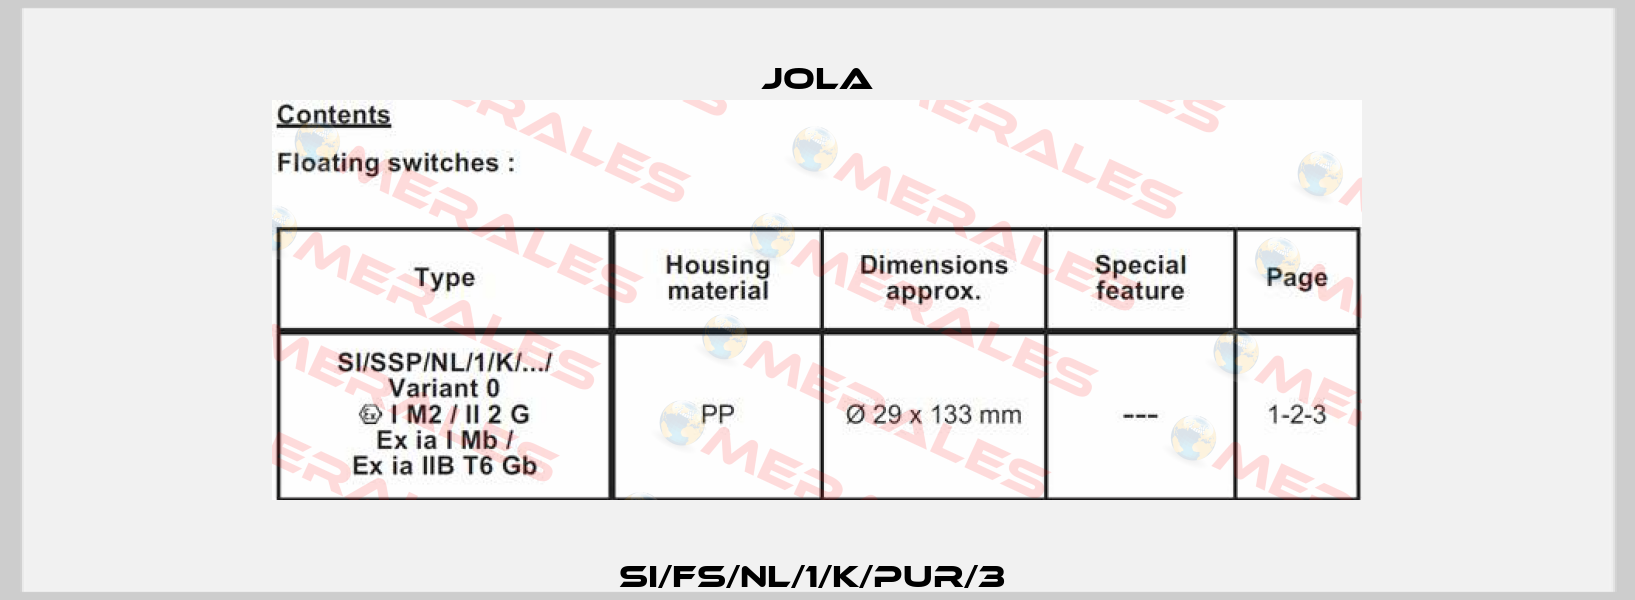 SI/FS/NL/1/K/PUR/3  Jola